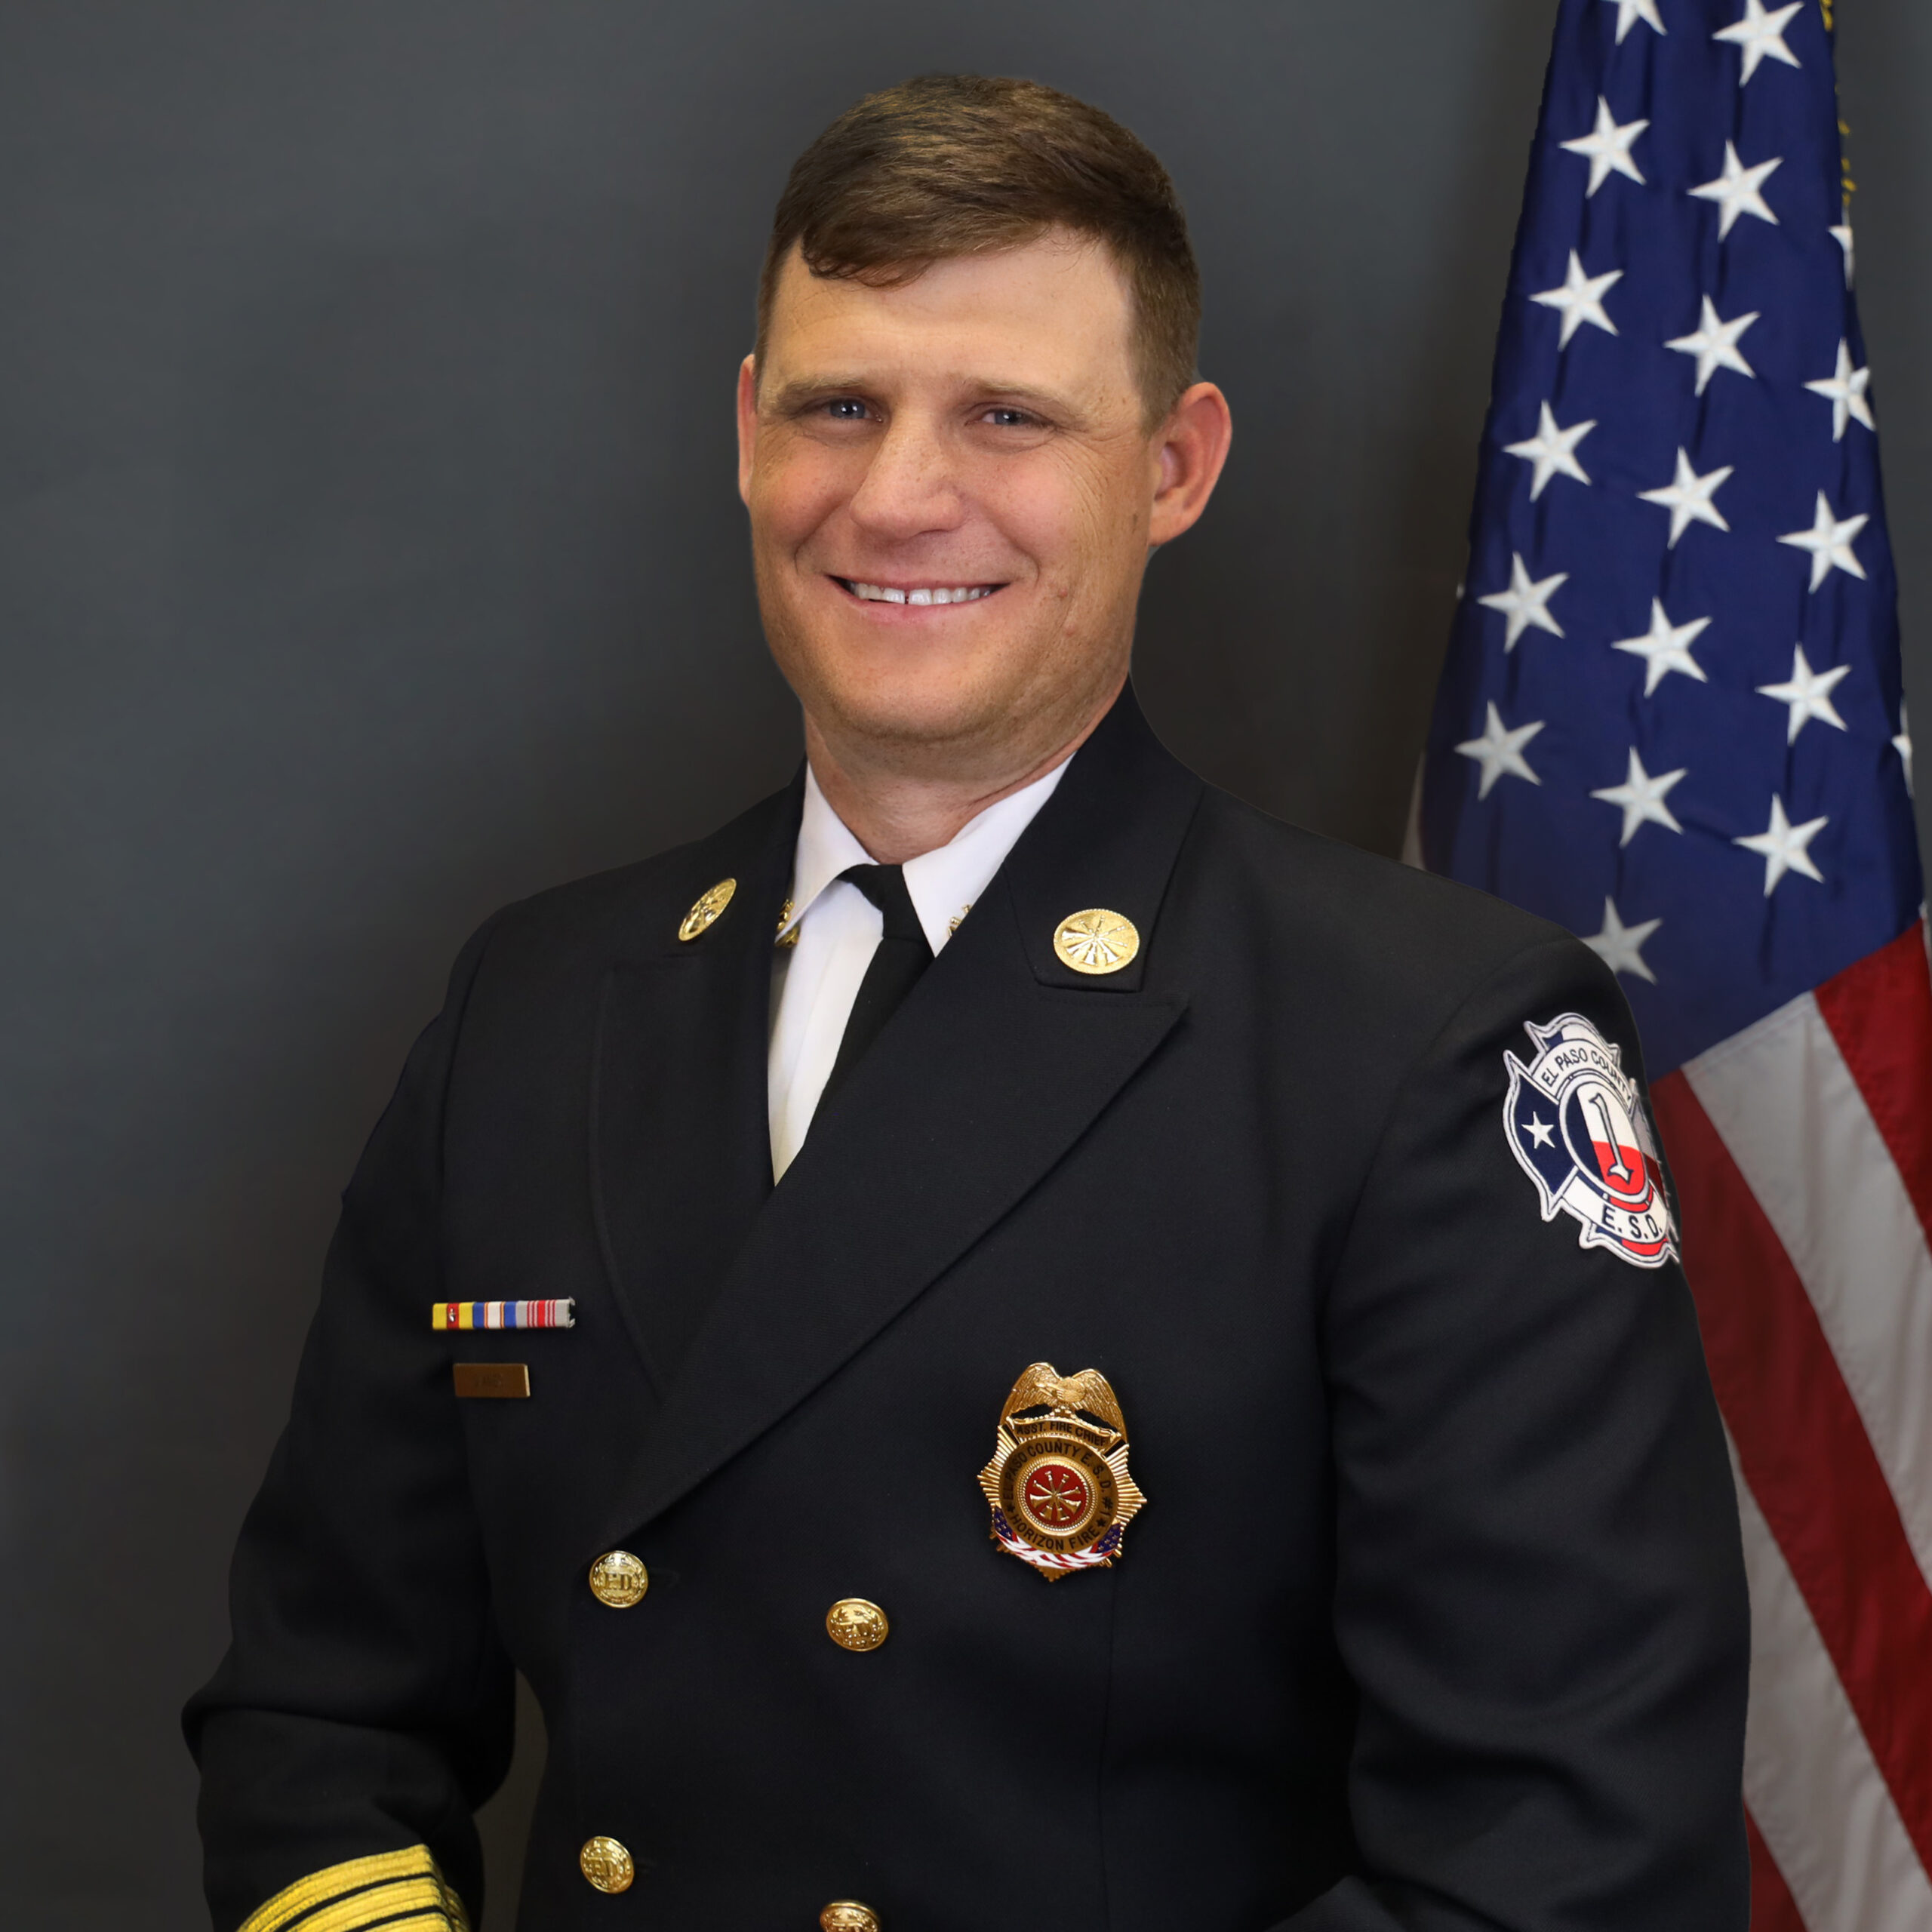 Daniel Ames - Assistant Fire Chief